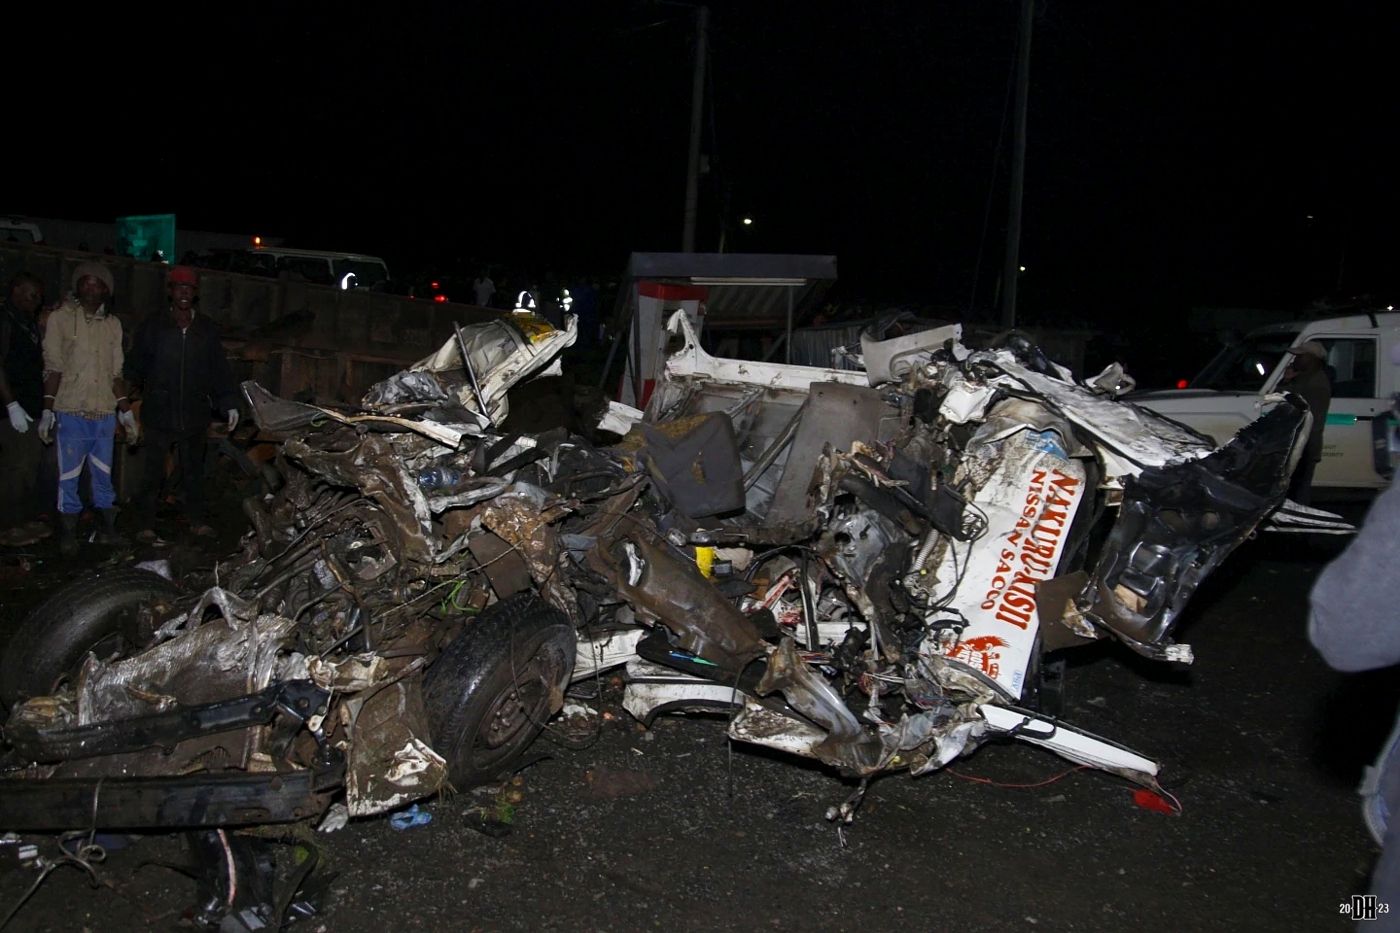 DH - Over 50 dead as truck crashes into vendor market 1 -  Londiani, Kenya - Jun 23 2023.jpg